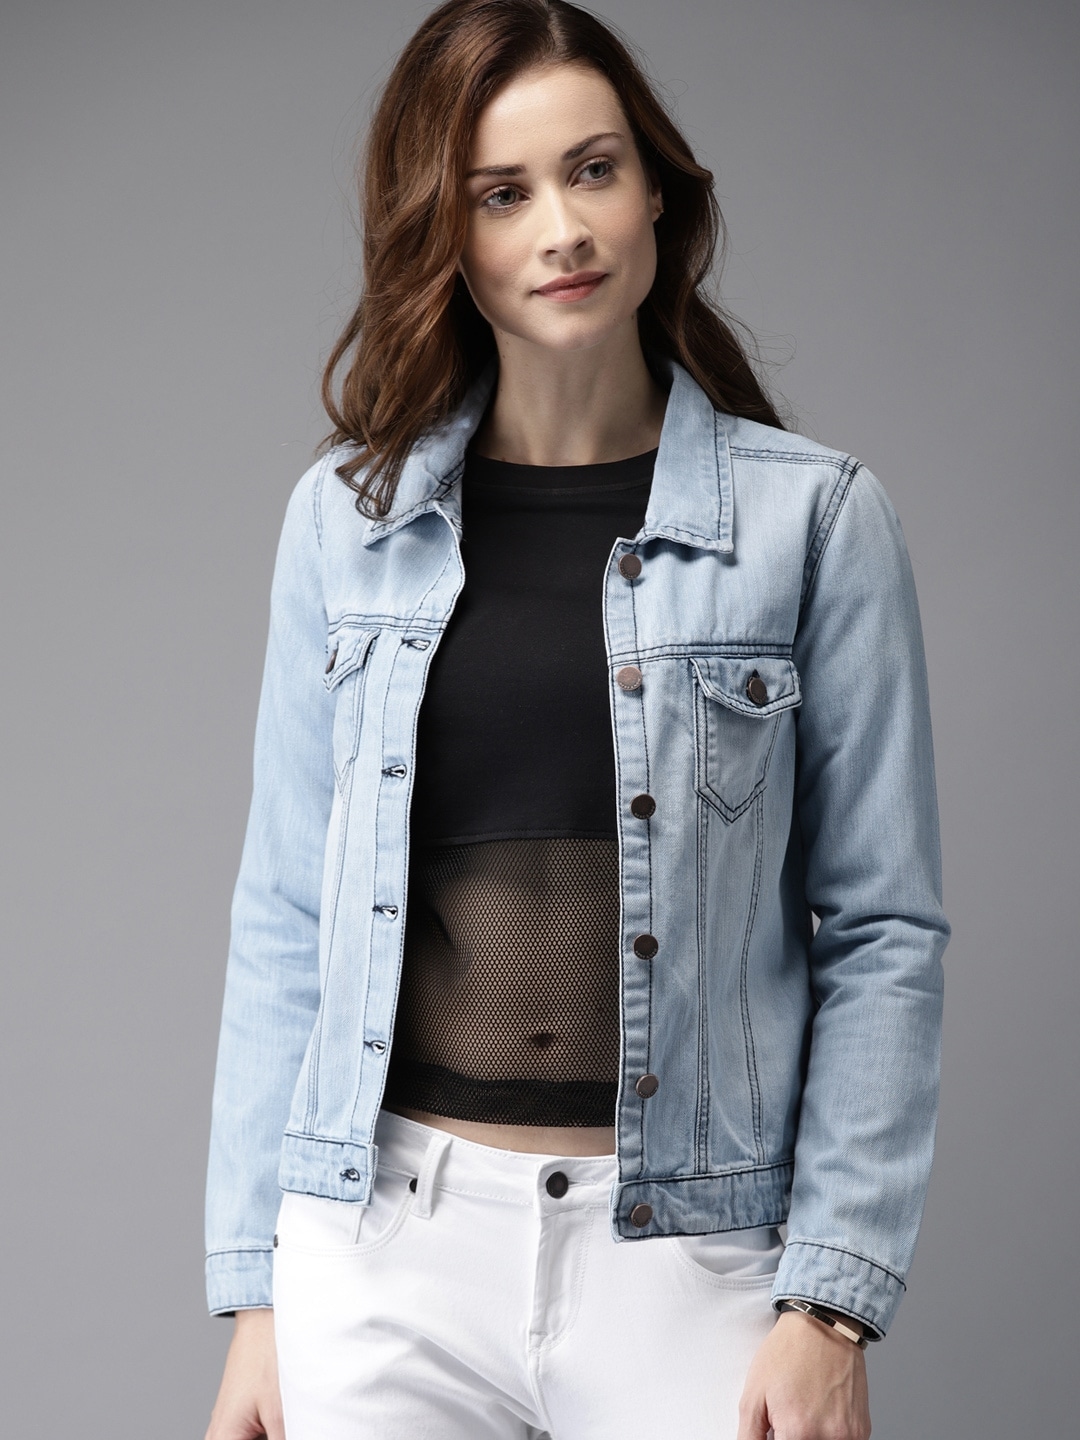 Buy Jeans Jacket Women online | Lazada.com.ph-cacanhphuclong.com.vn